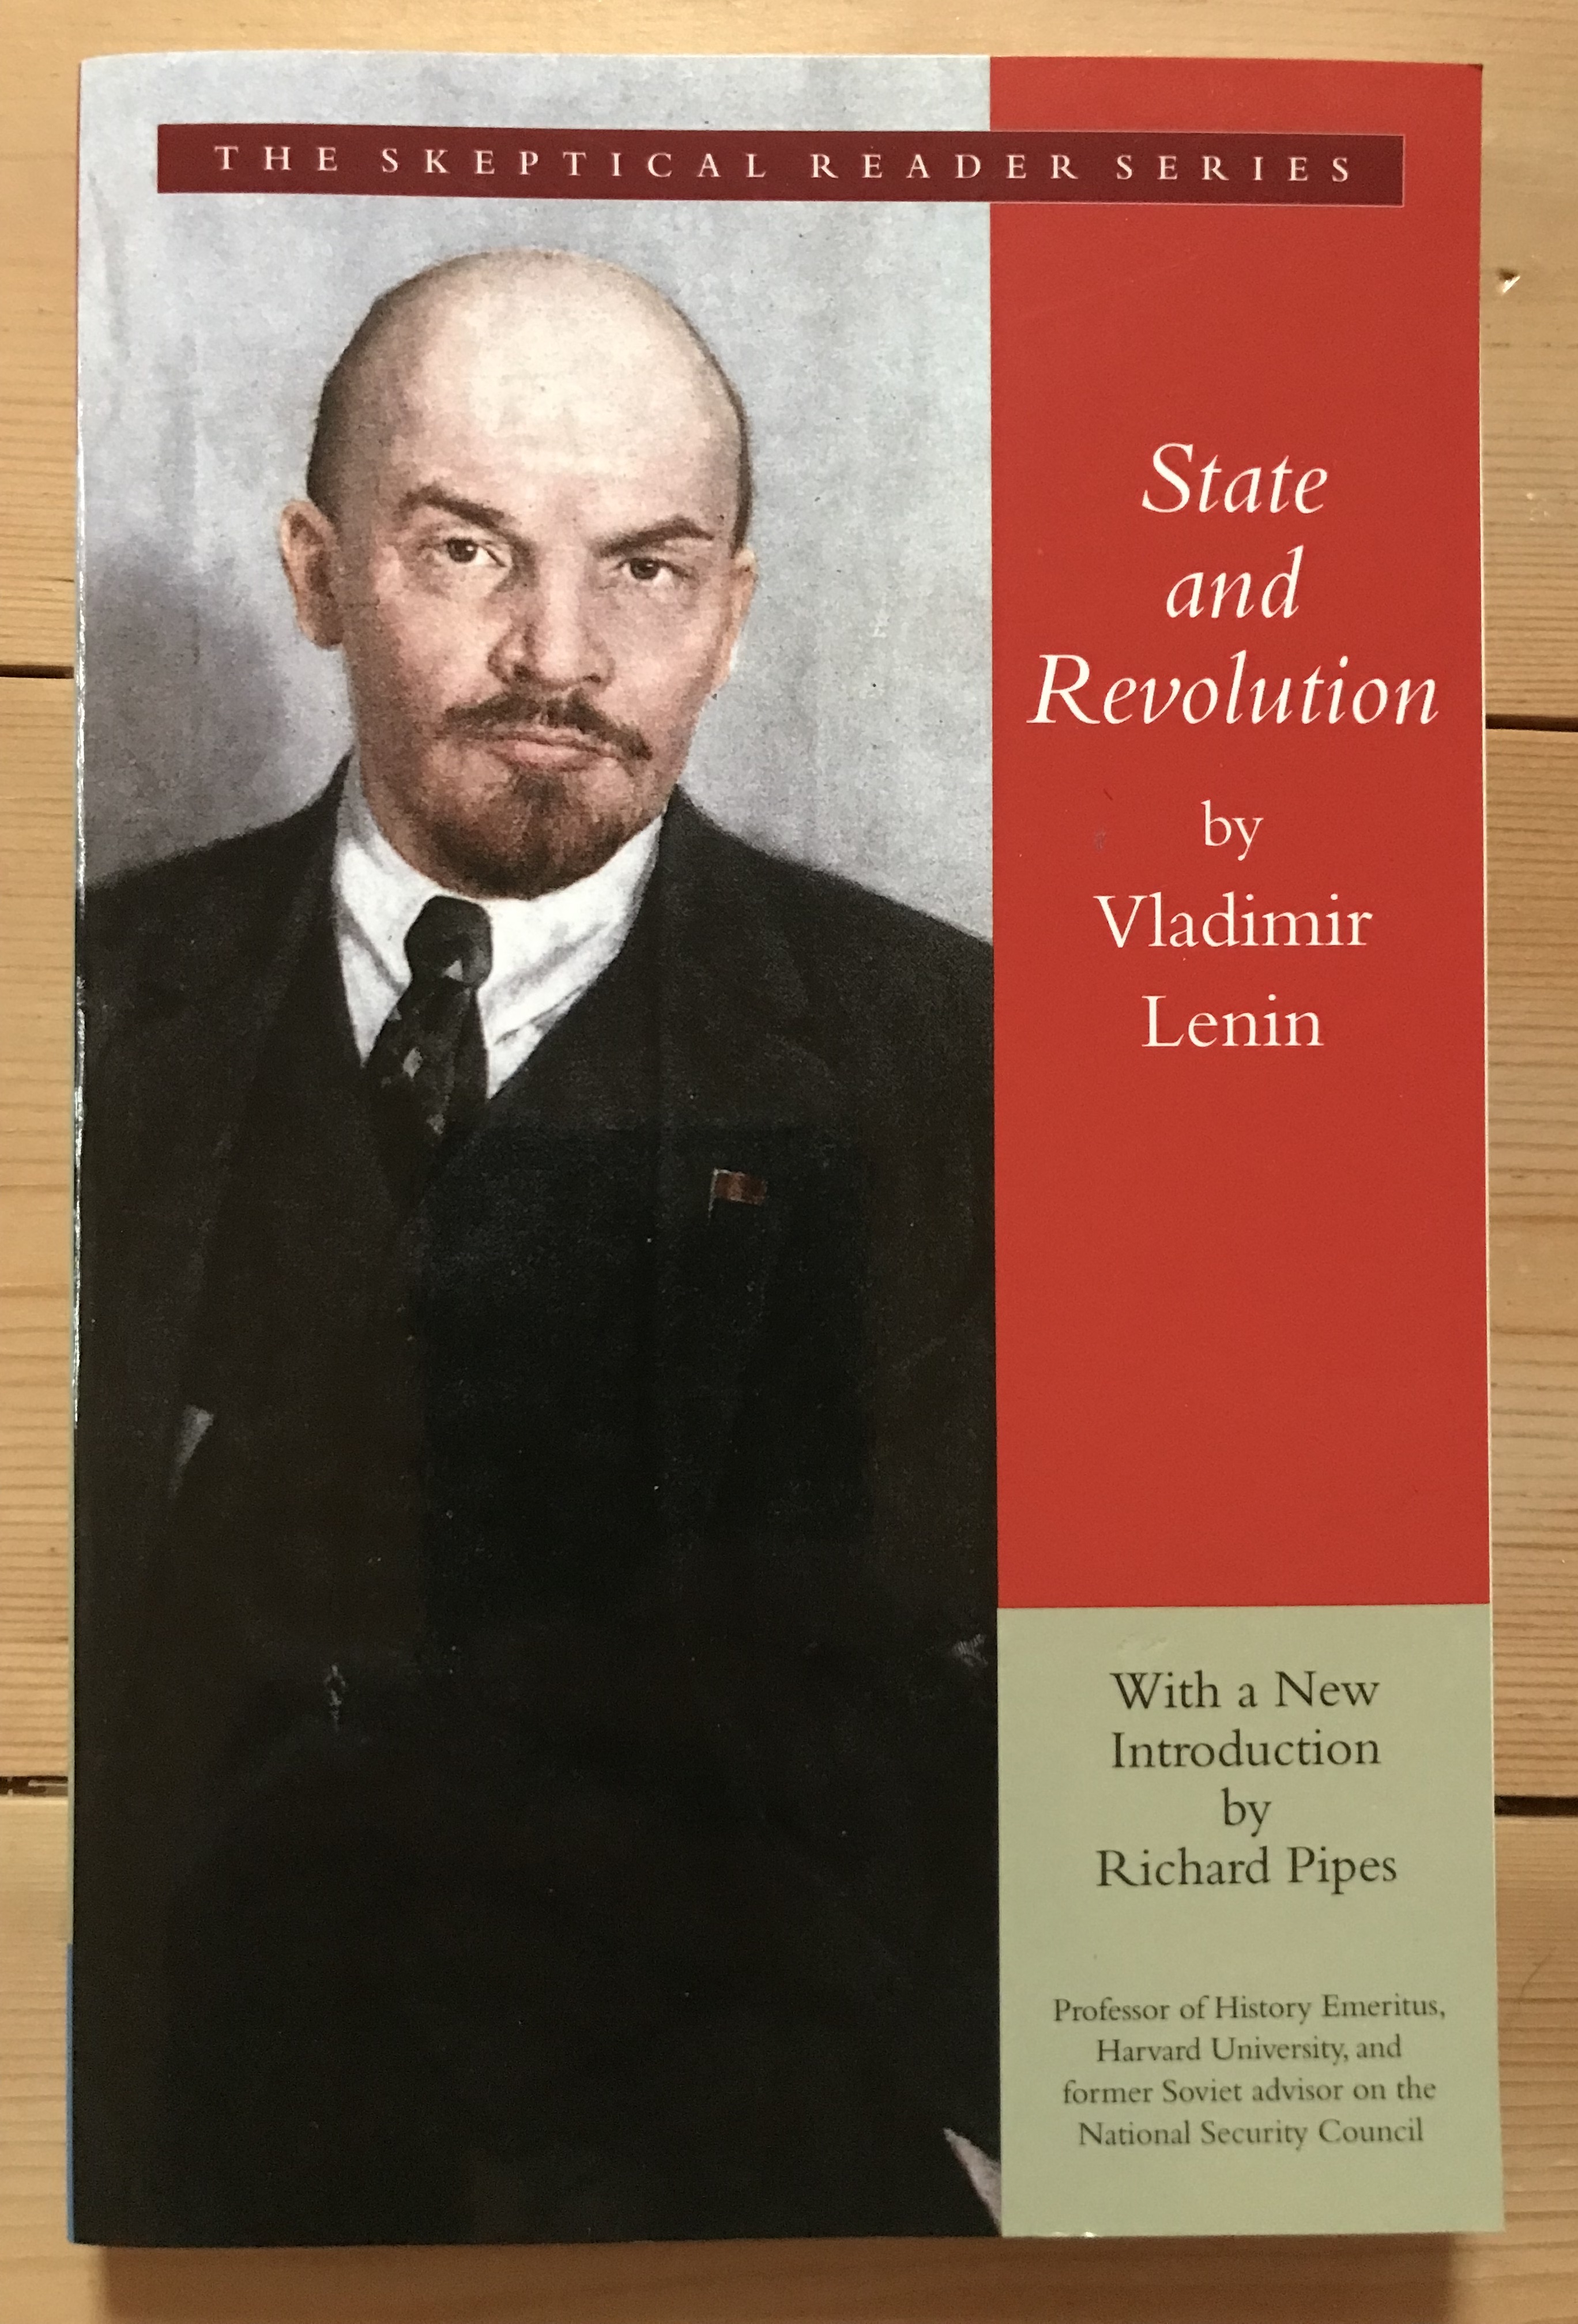 State and Revolution (Skeptical Reader Series) - Lenin, Vladimir; Pipes, Richard (introduction)